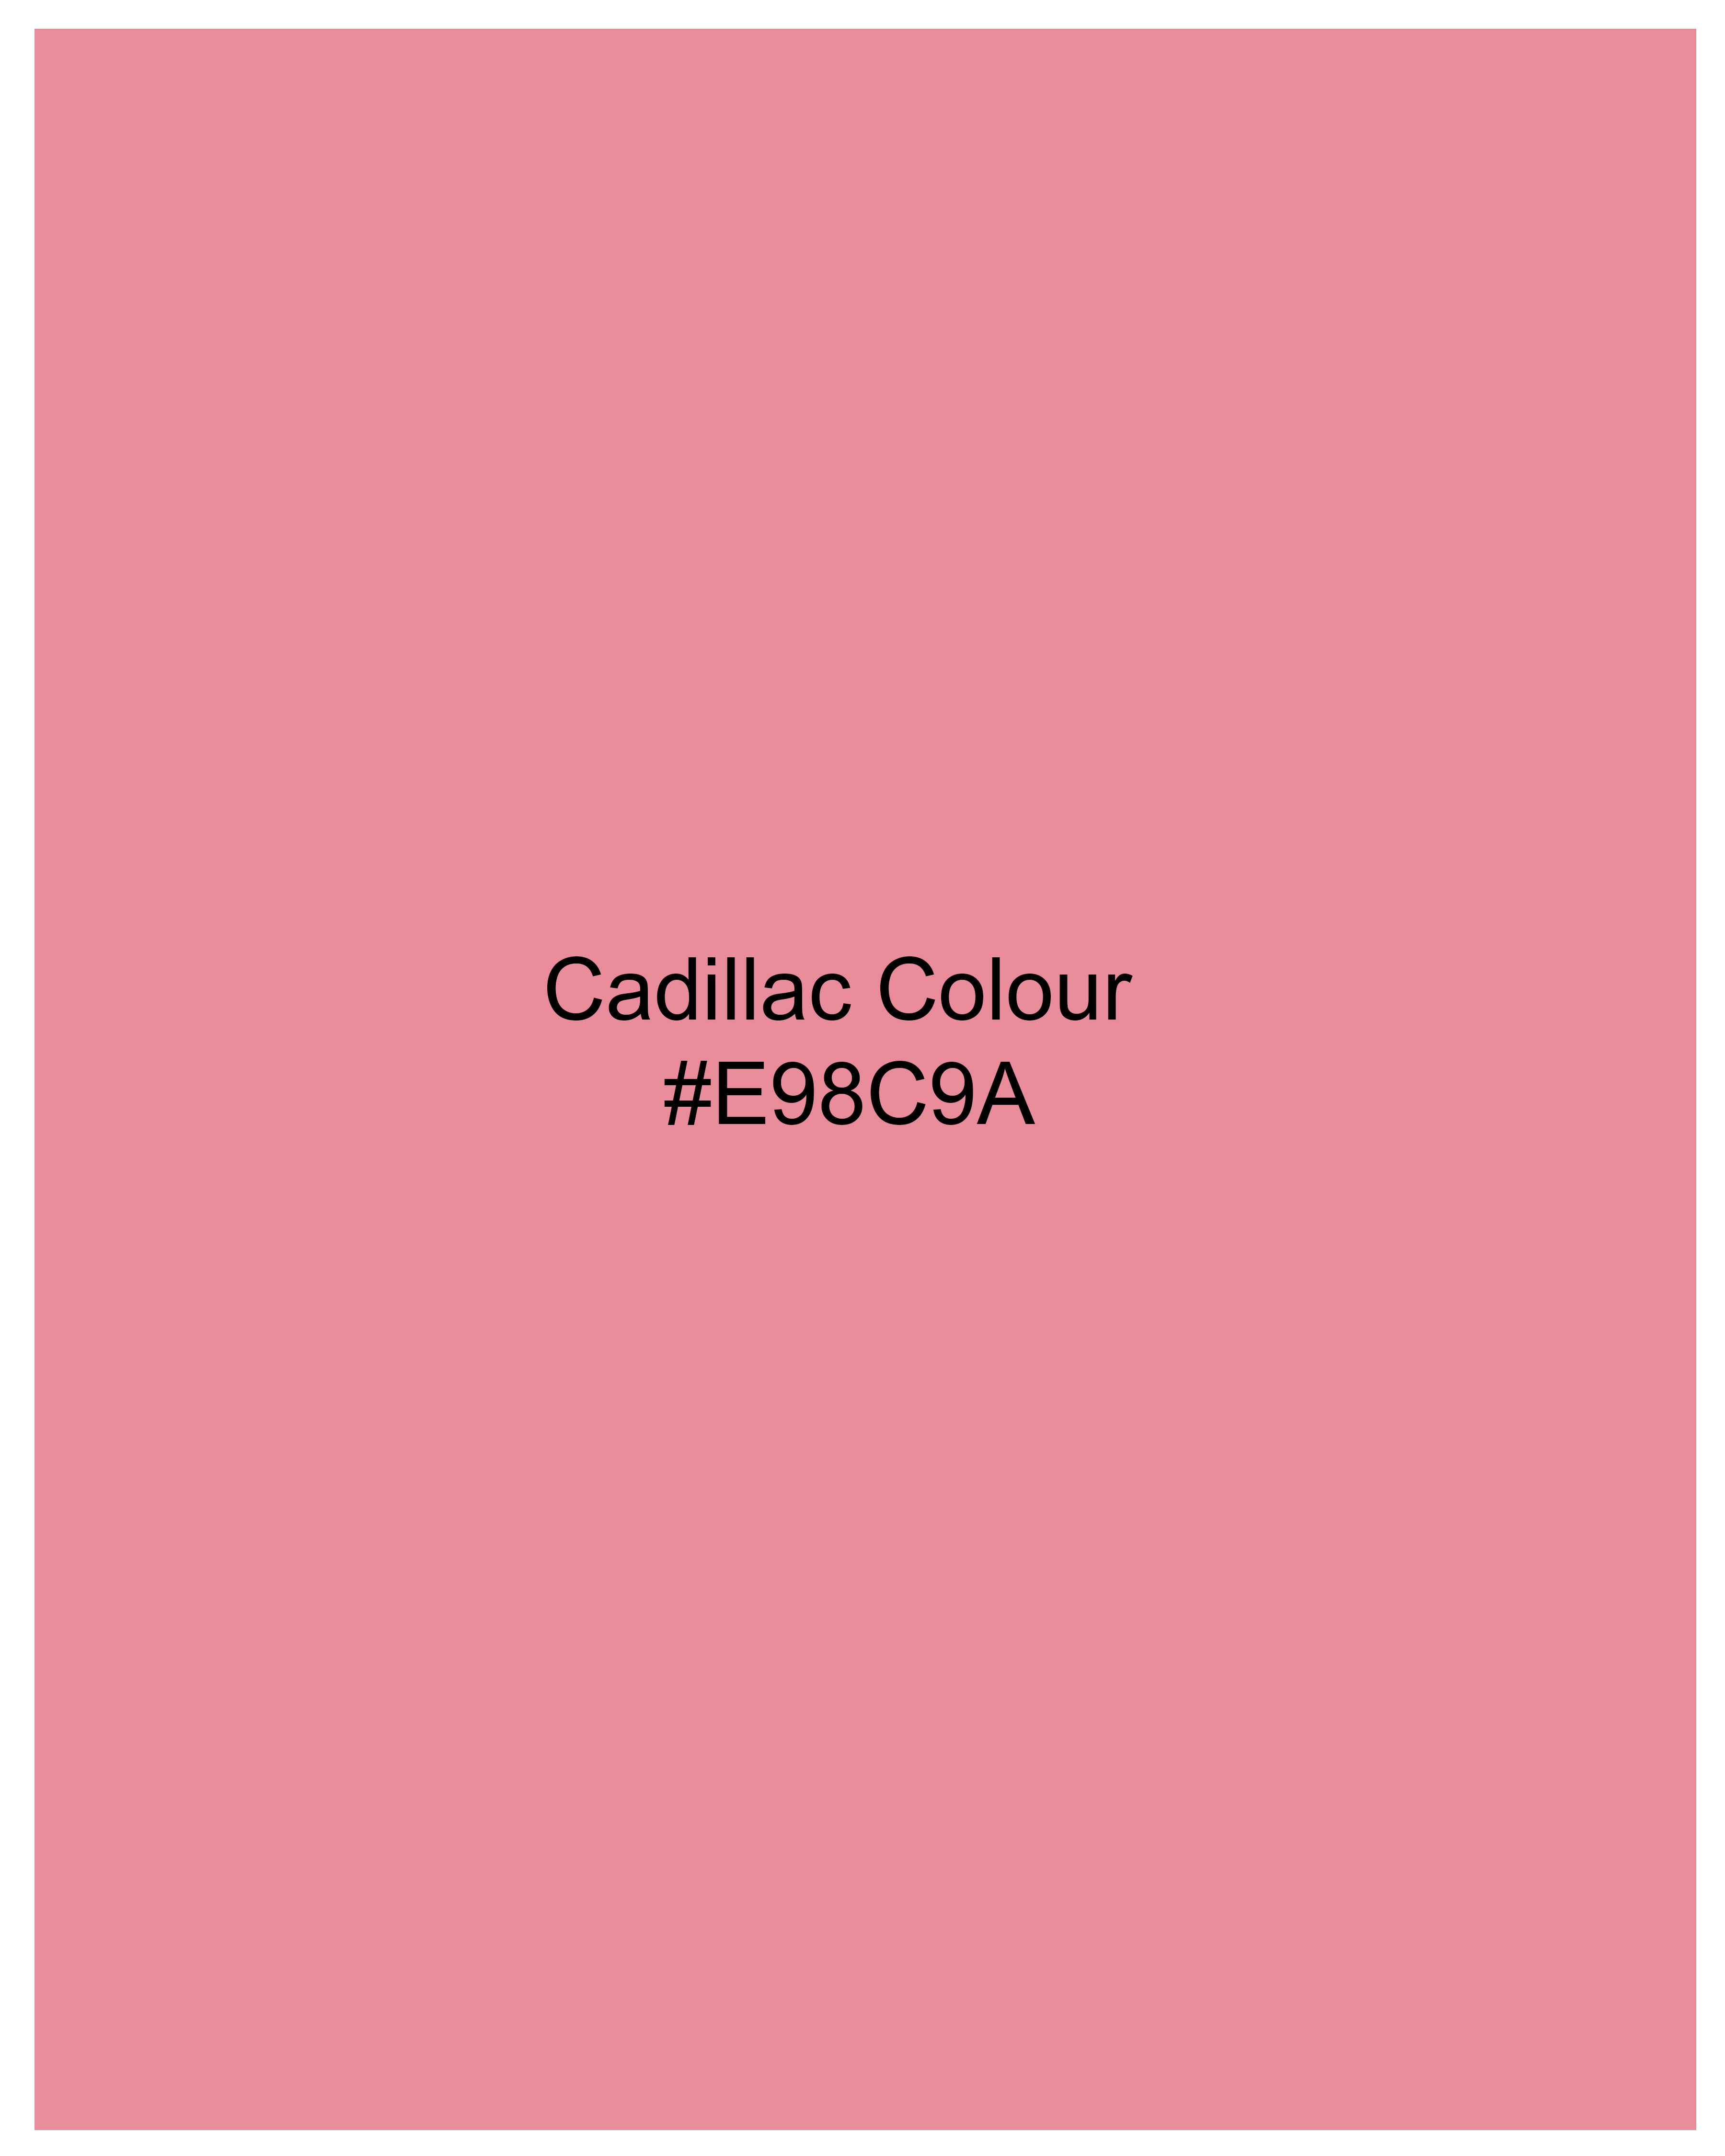 Cadillac Pink Luxurious Linen Shirt 8460-BD-38,8460-BD-H-38,8460-BD-39,8460-BD-H-39,8460-BD-40,8460-BD-H-40,8460-BD-42,8460-BD-H-42,8460-BD-44,8460-BD-H-44,8460-BD-46,8460-BD-H-46,8460-BD-48,8460-BD-H-48,8460-BD-50,8460-BD-H-50,8460-BD-52,8460-BD-H-52